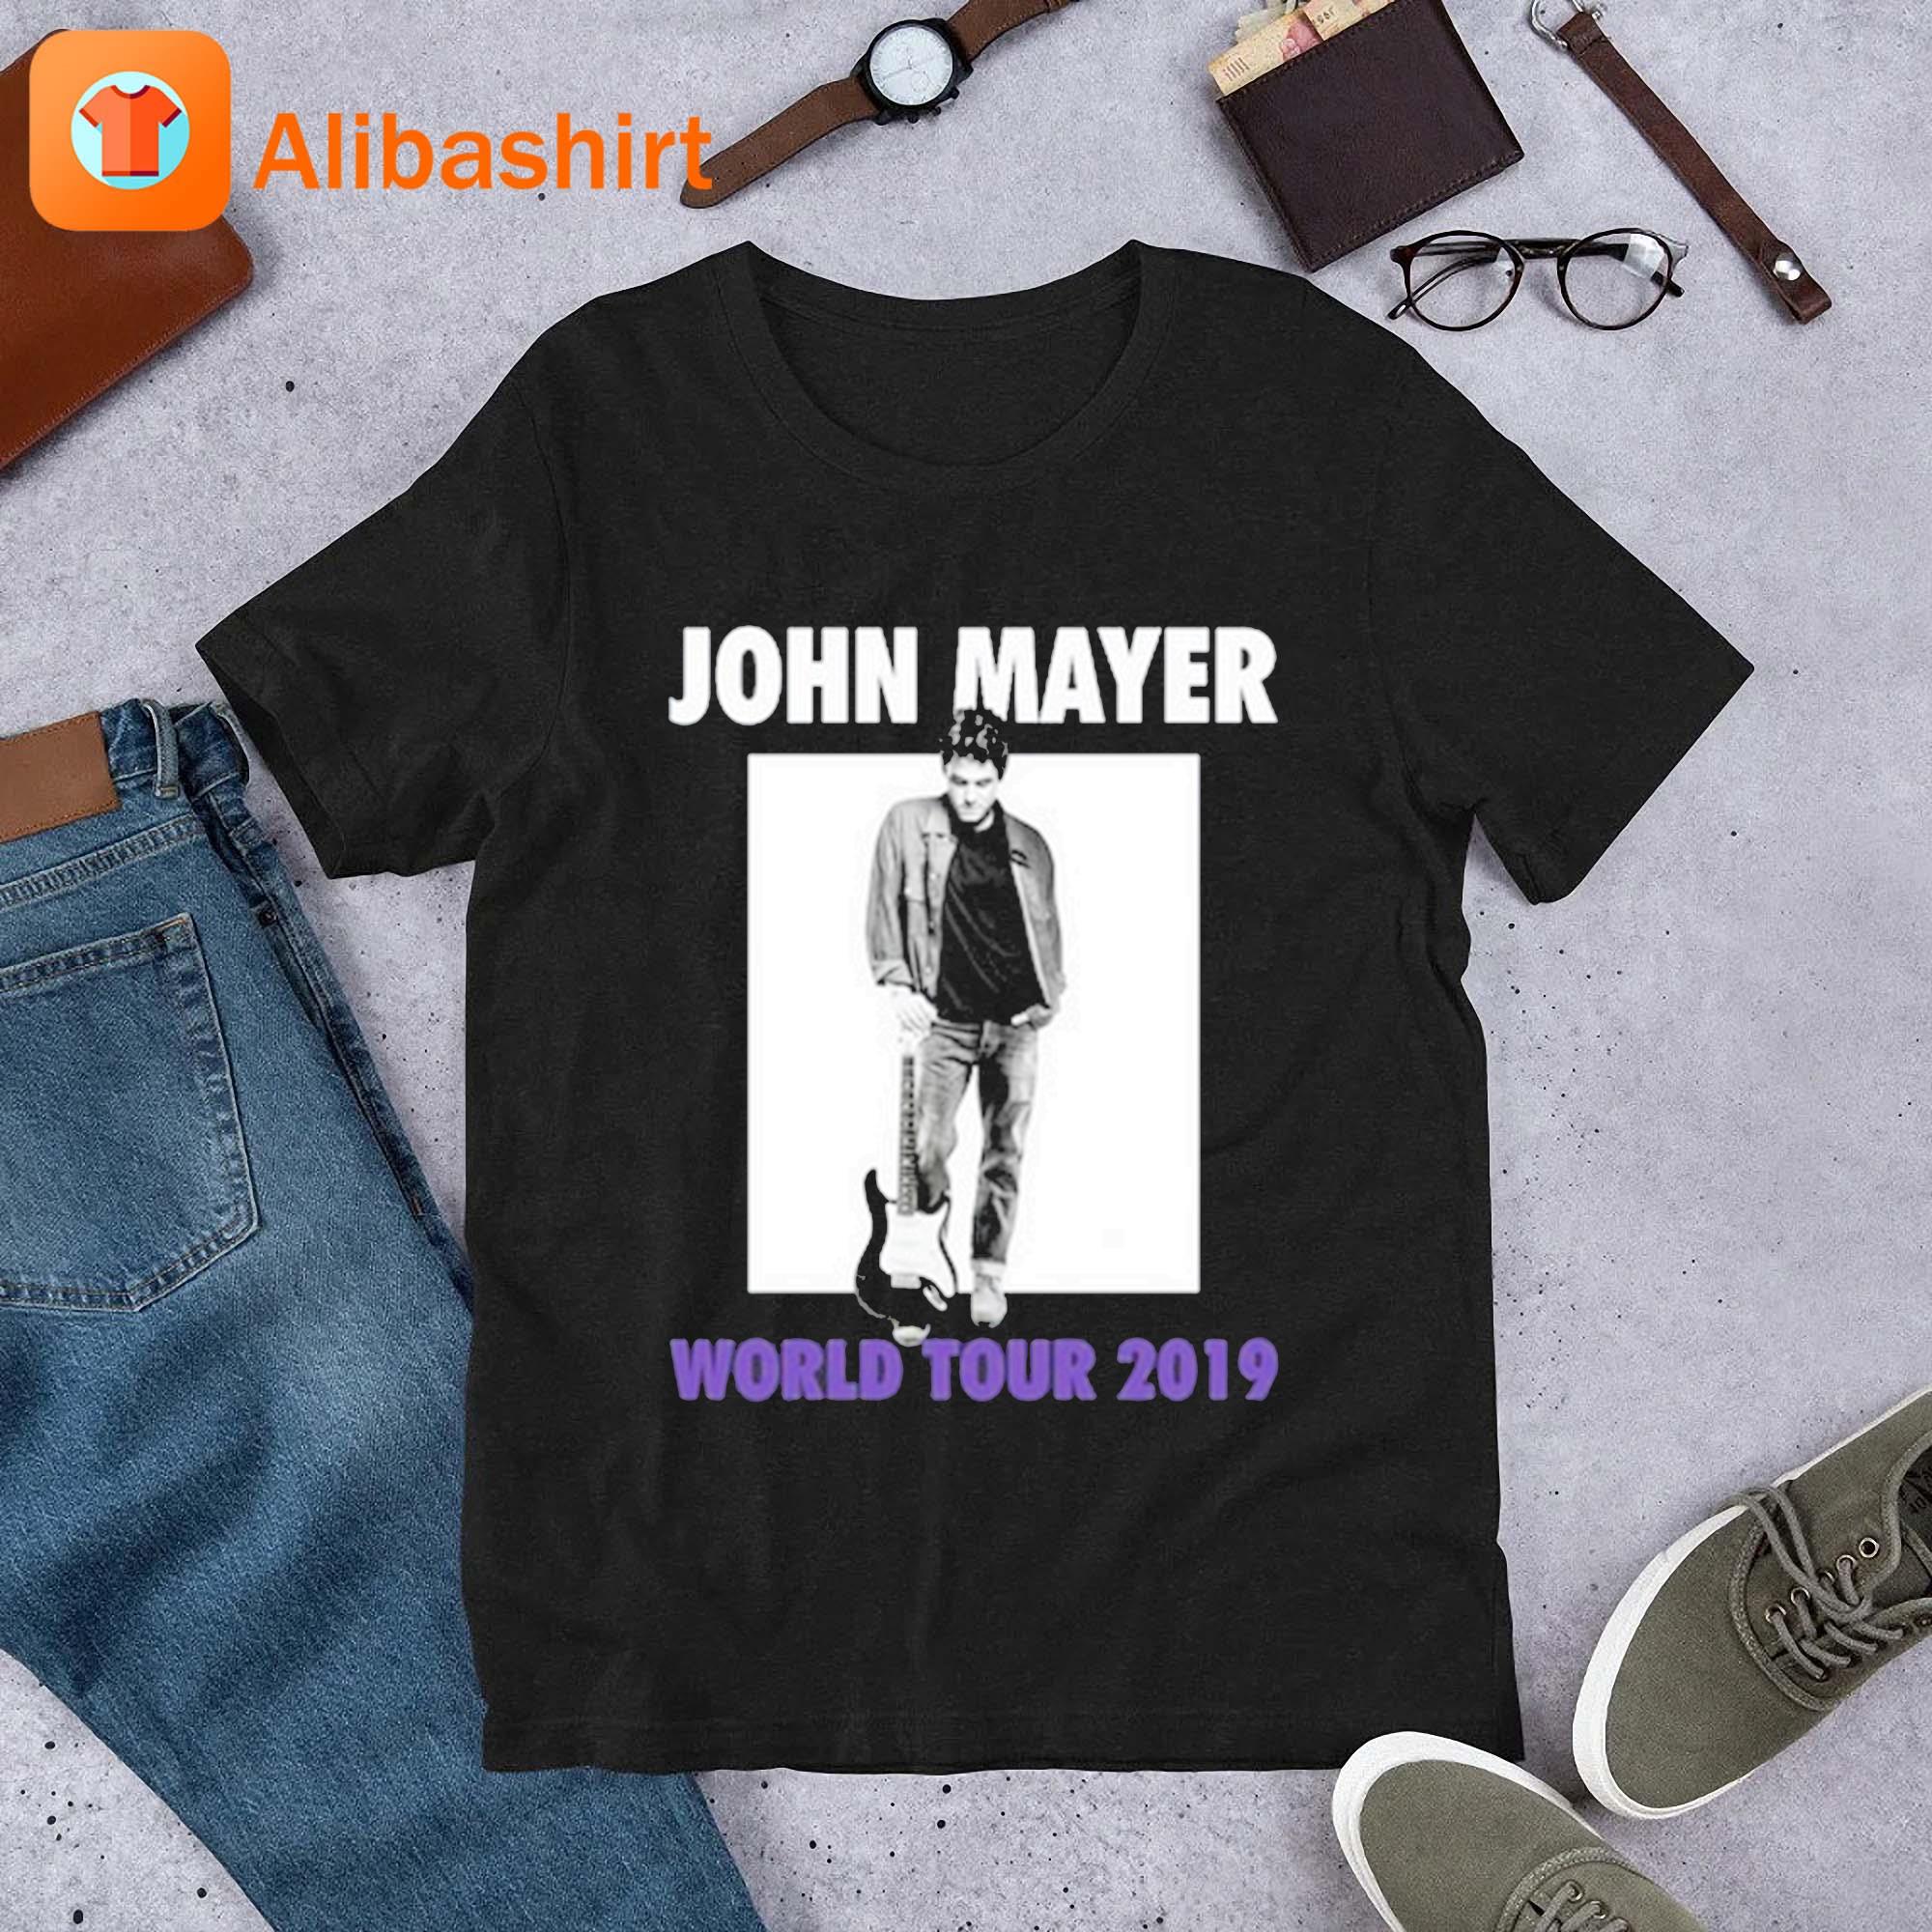 Travis Kelce Wearing John Mayer T-Shirt